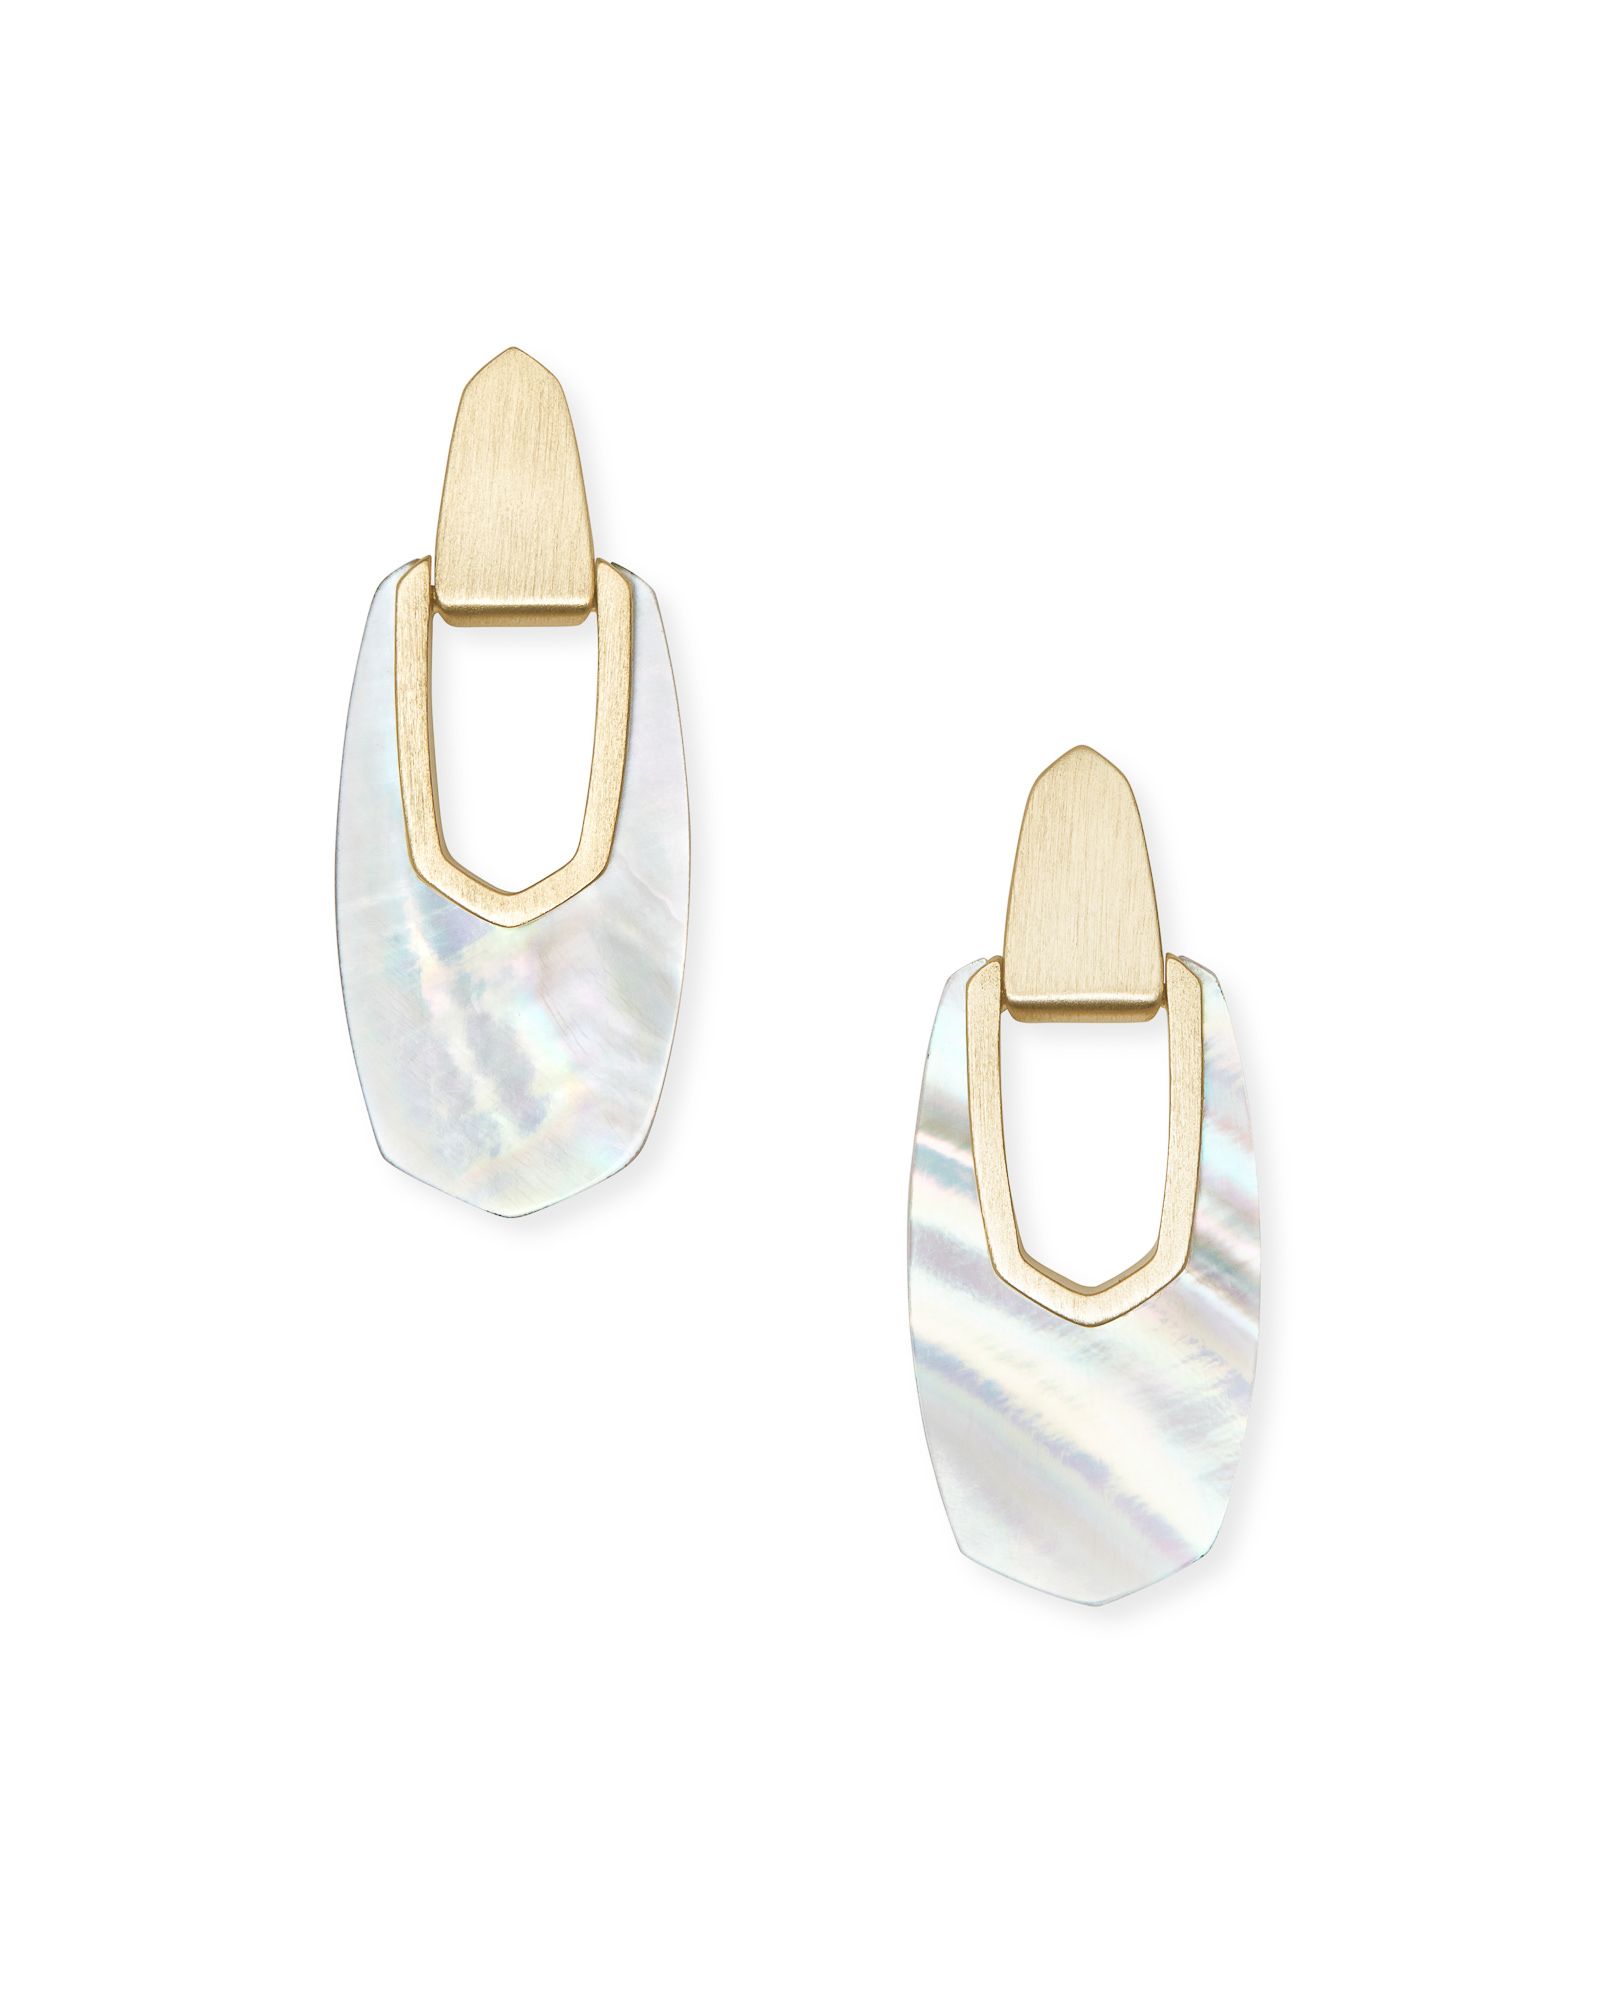 Kailyn Gold Drop Earrings in Ivory Mother-of-Pearl | Kendra Scott